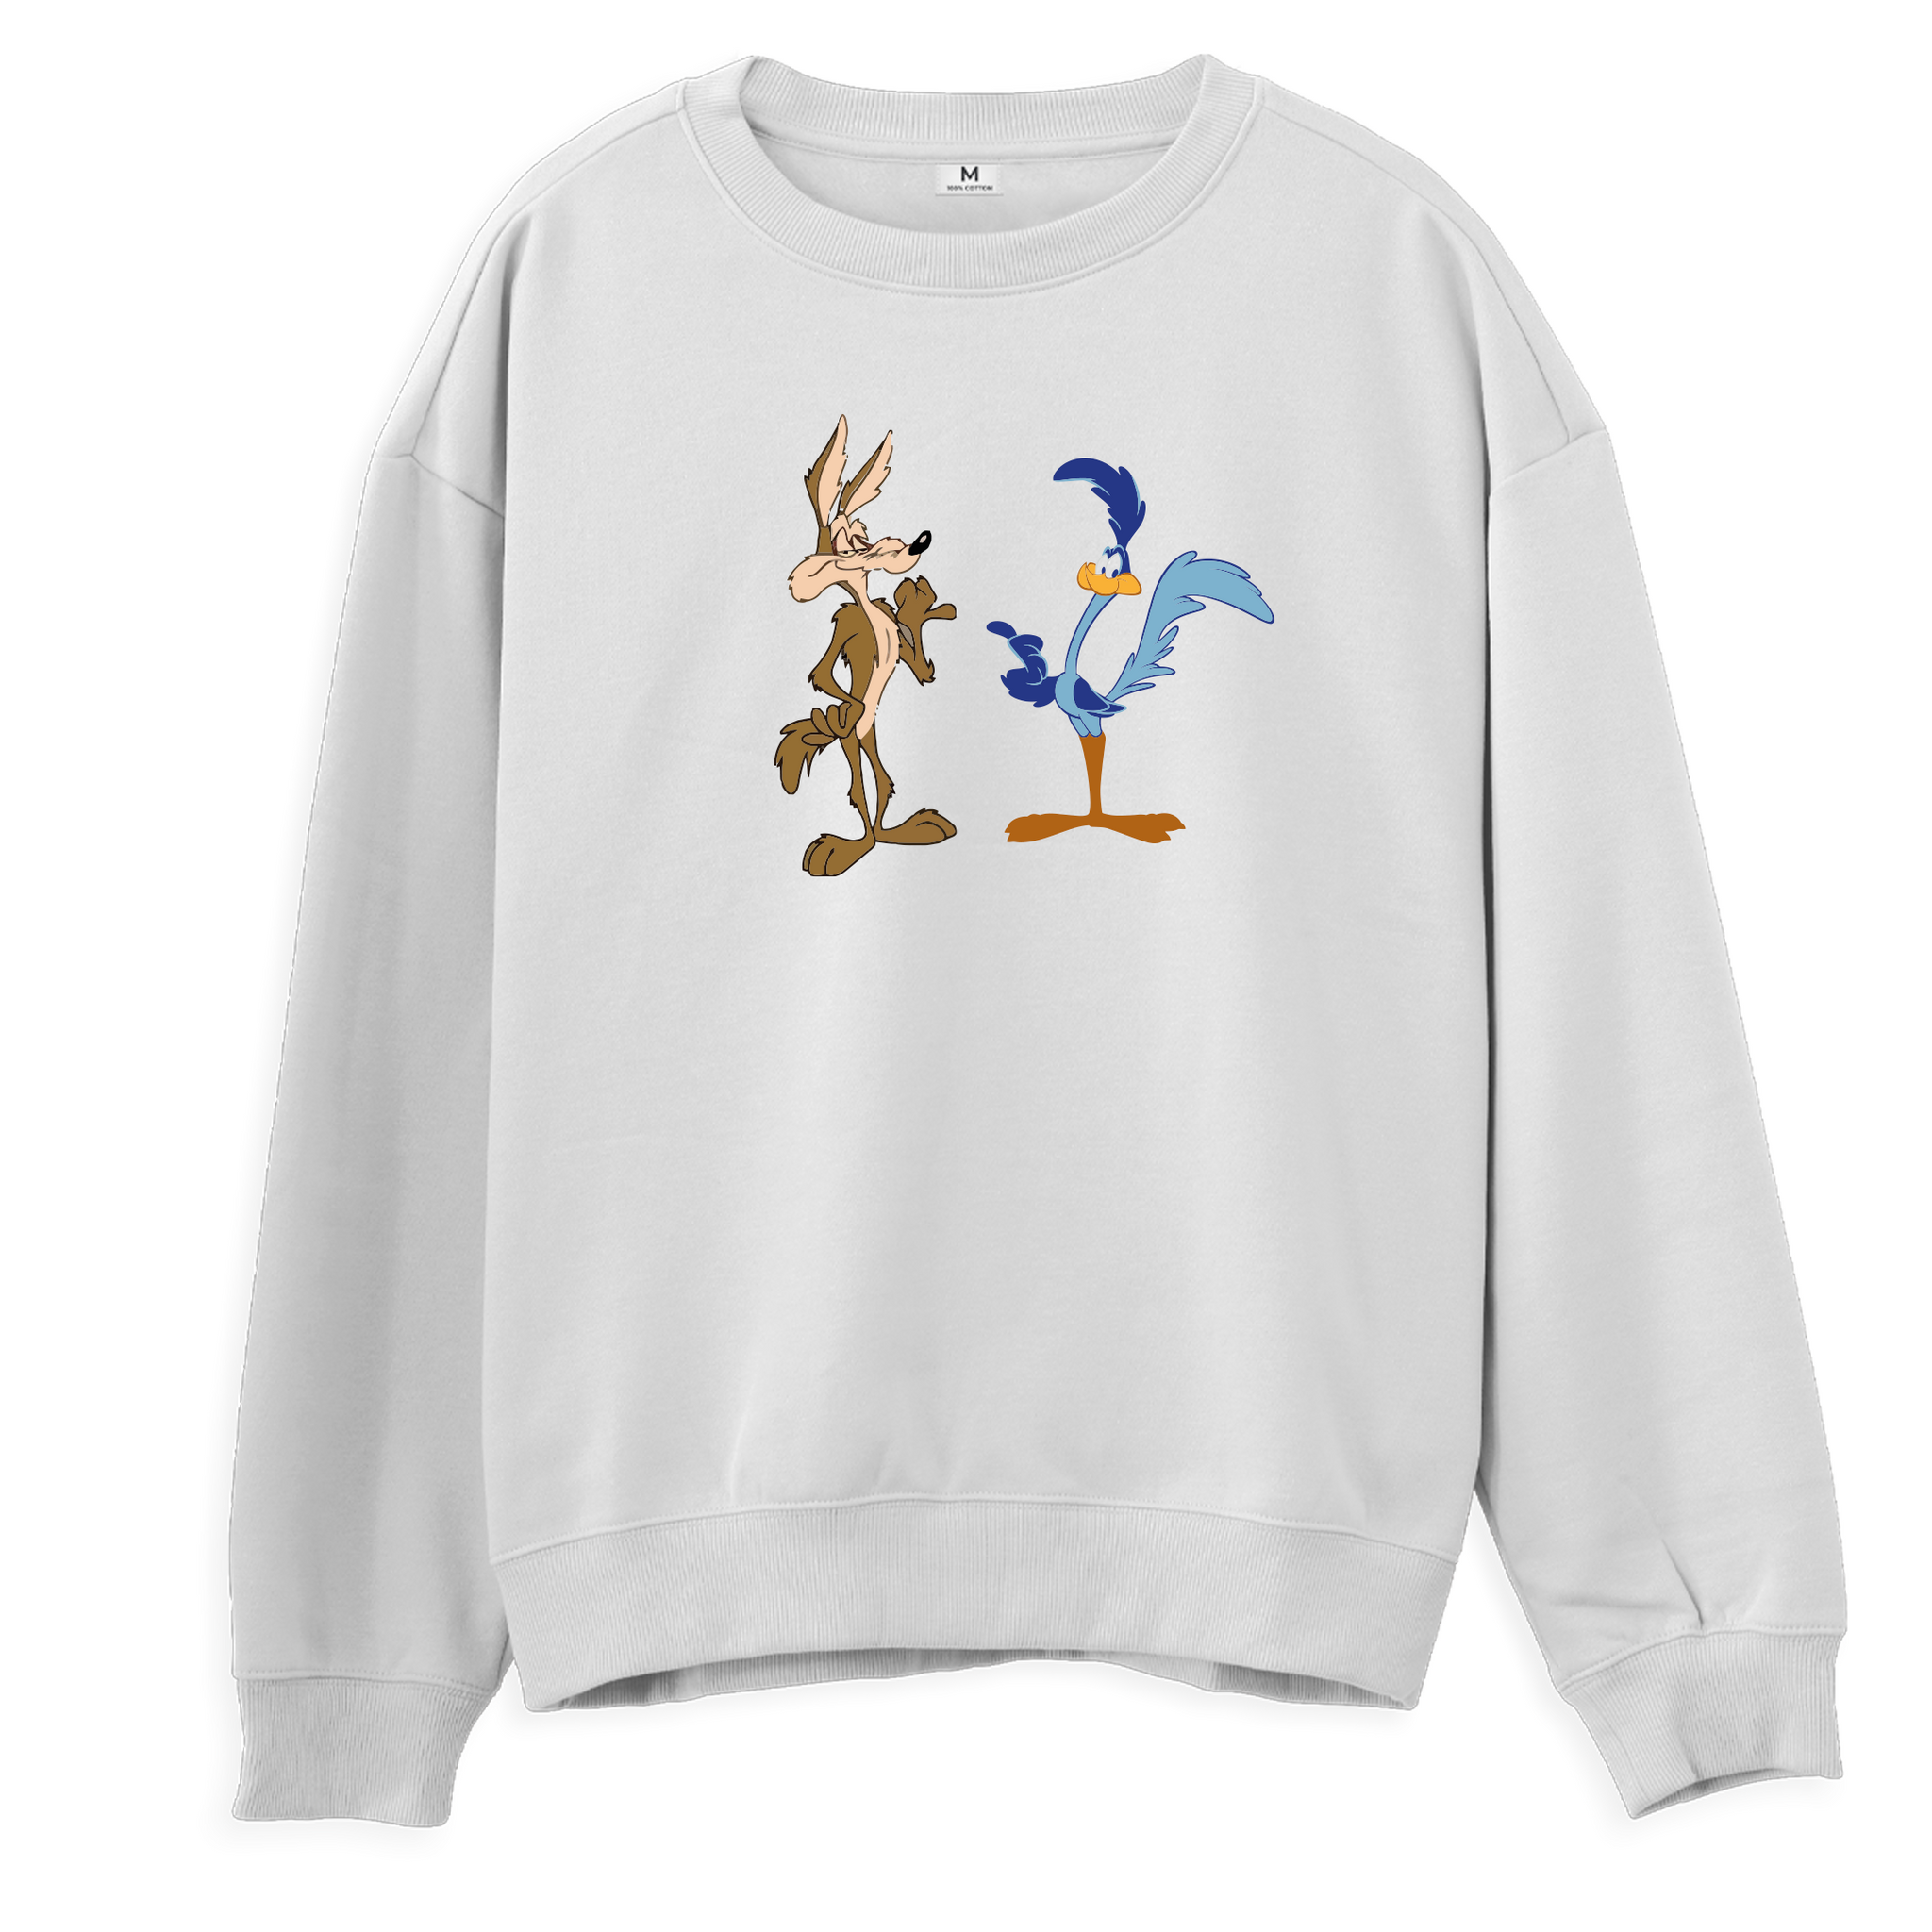 Coyote and Road Runner - Sweatshirt -Regular